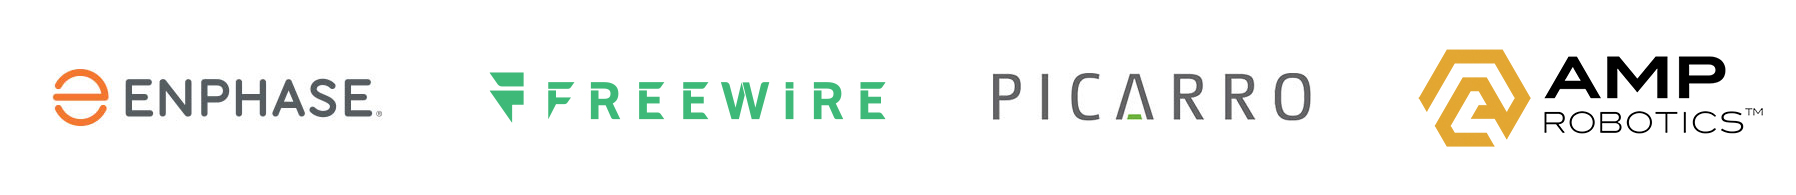 Company Logos: Enphase, Freewire, Picarro, and AMP Robotics